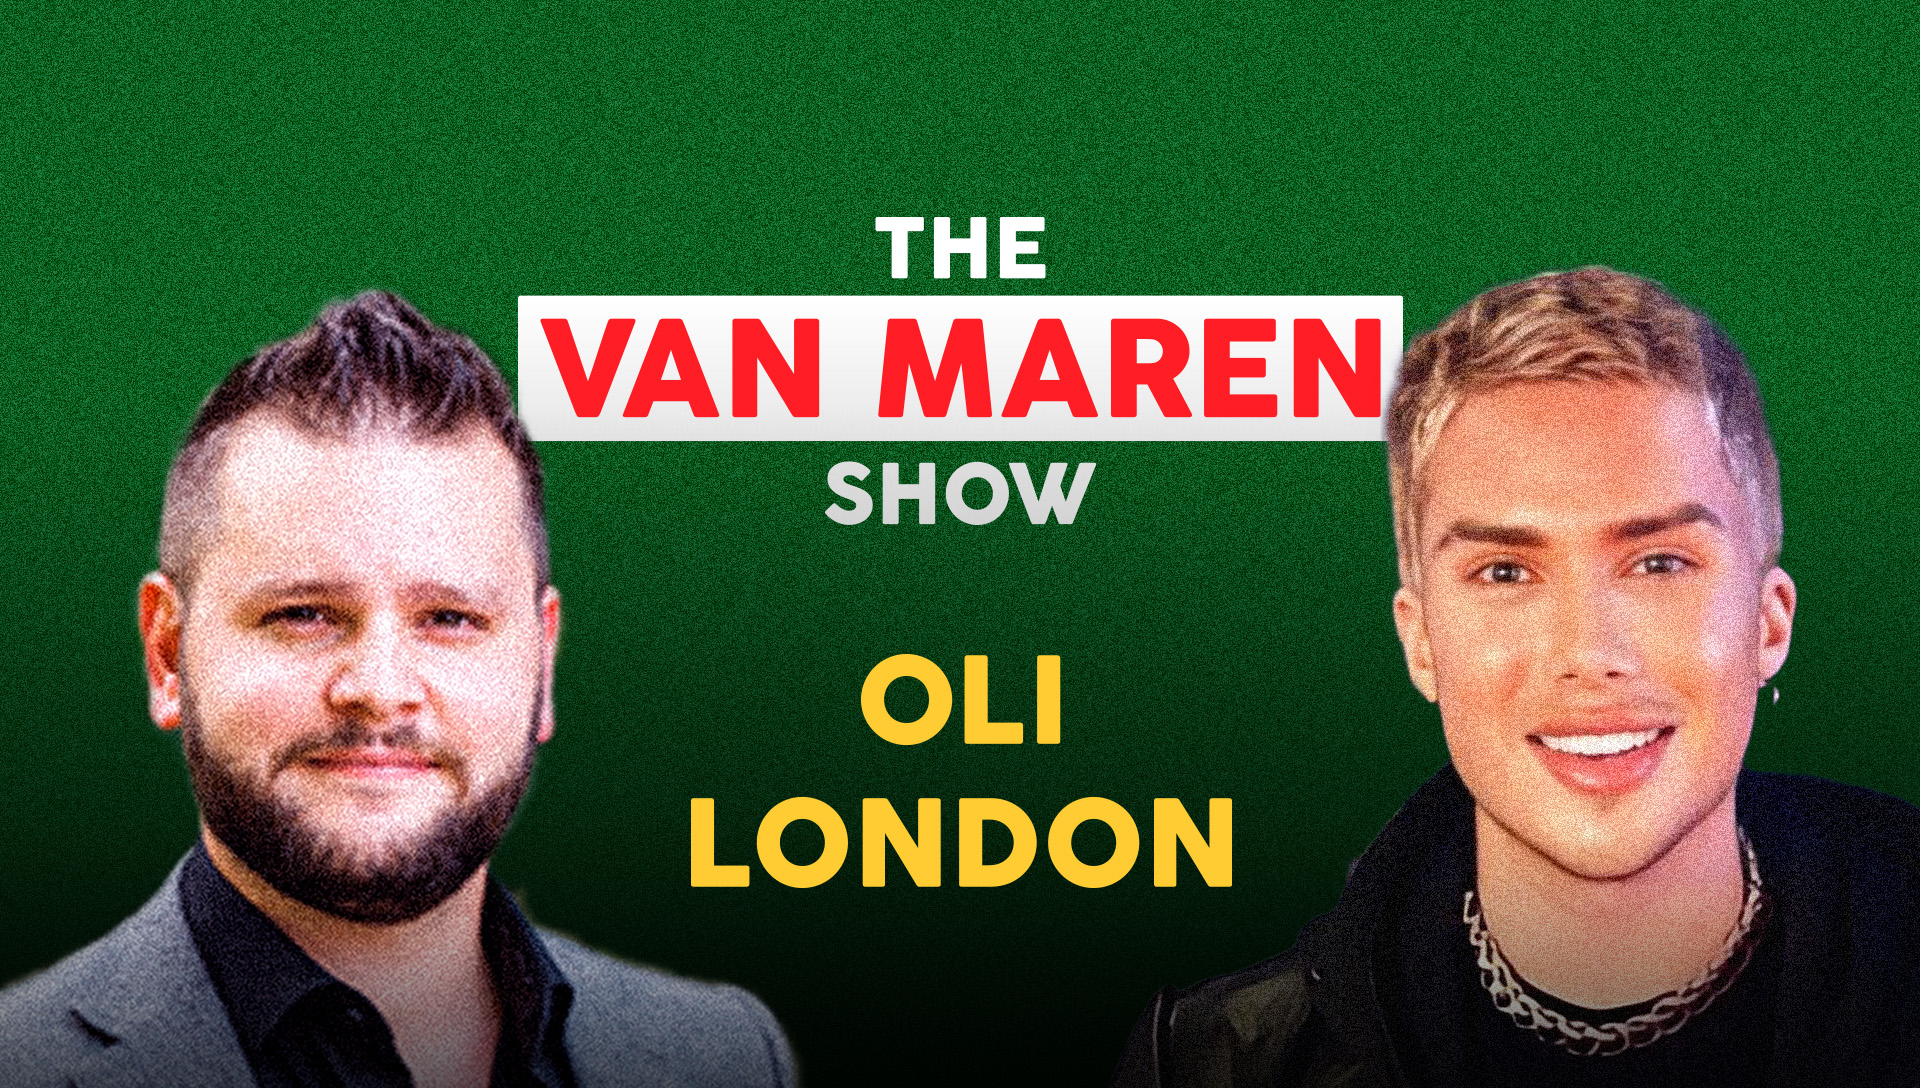 The Van Maren Show Episode 198: Oli London, former transgender, explains his detransition